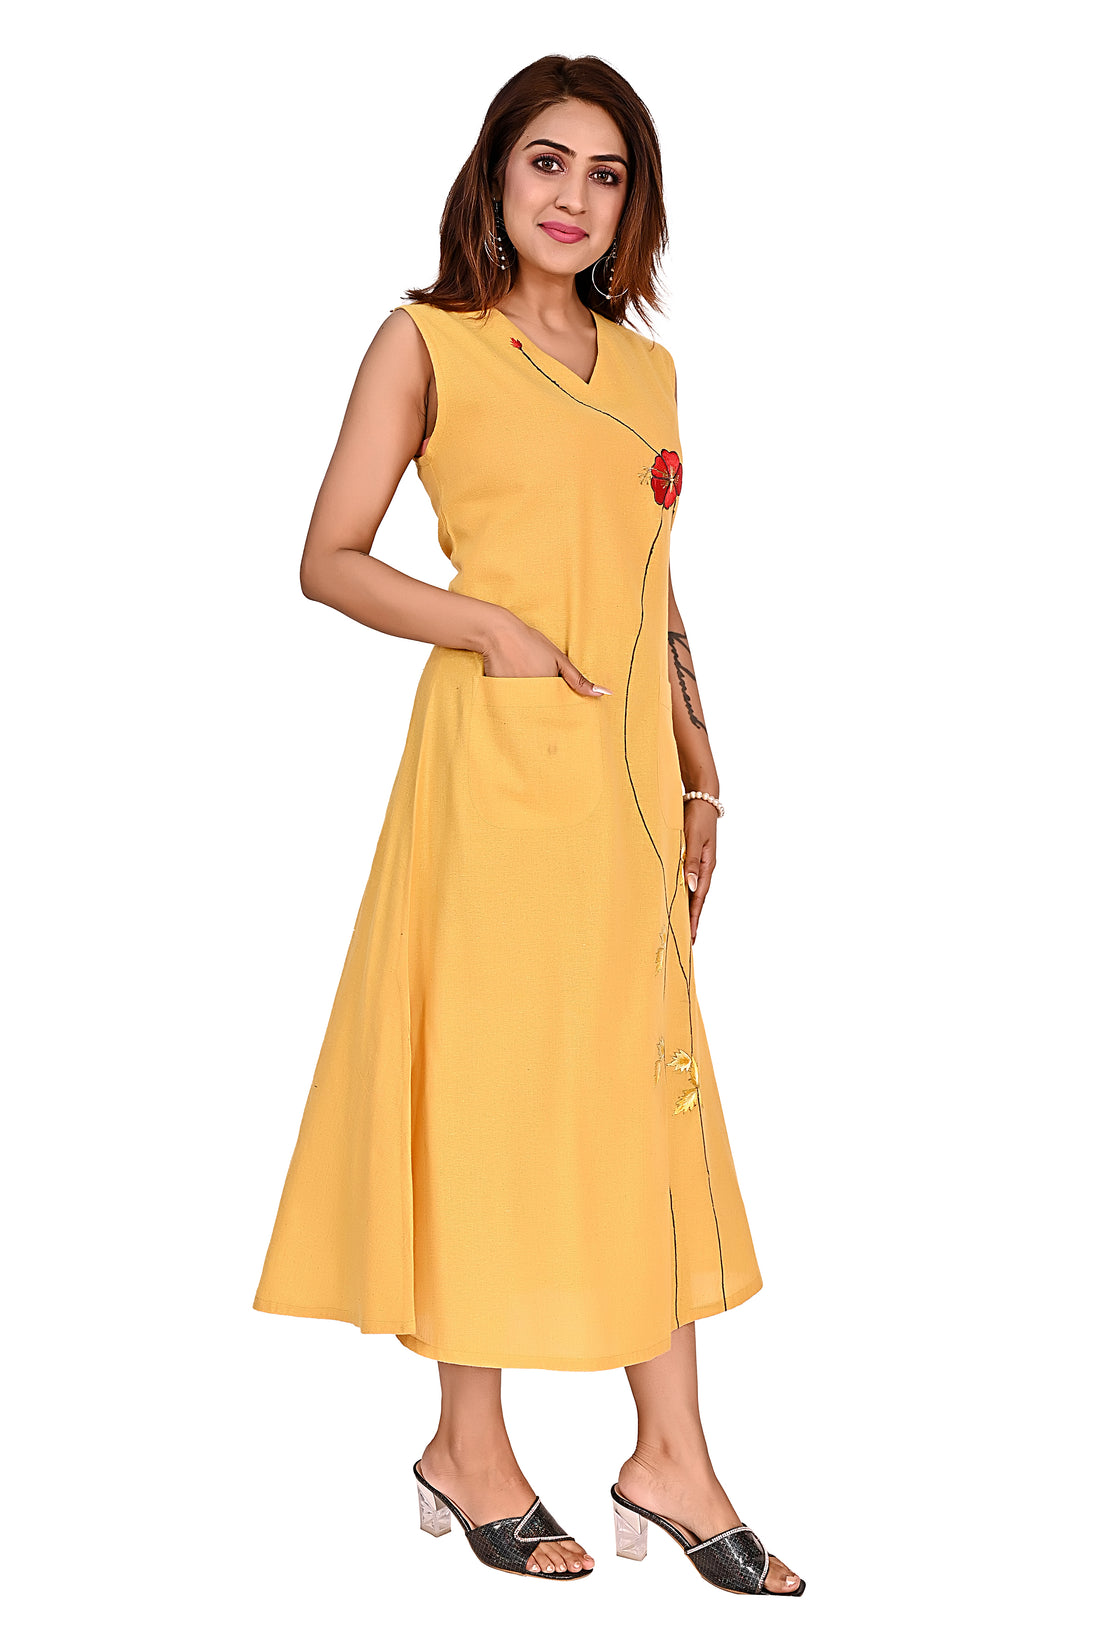 Nirmal online Premium cotton tunic Dress for Women in  Musturd Yellow  colour